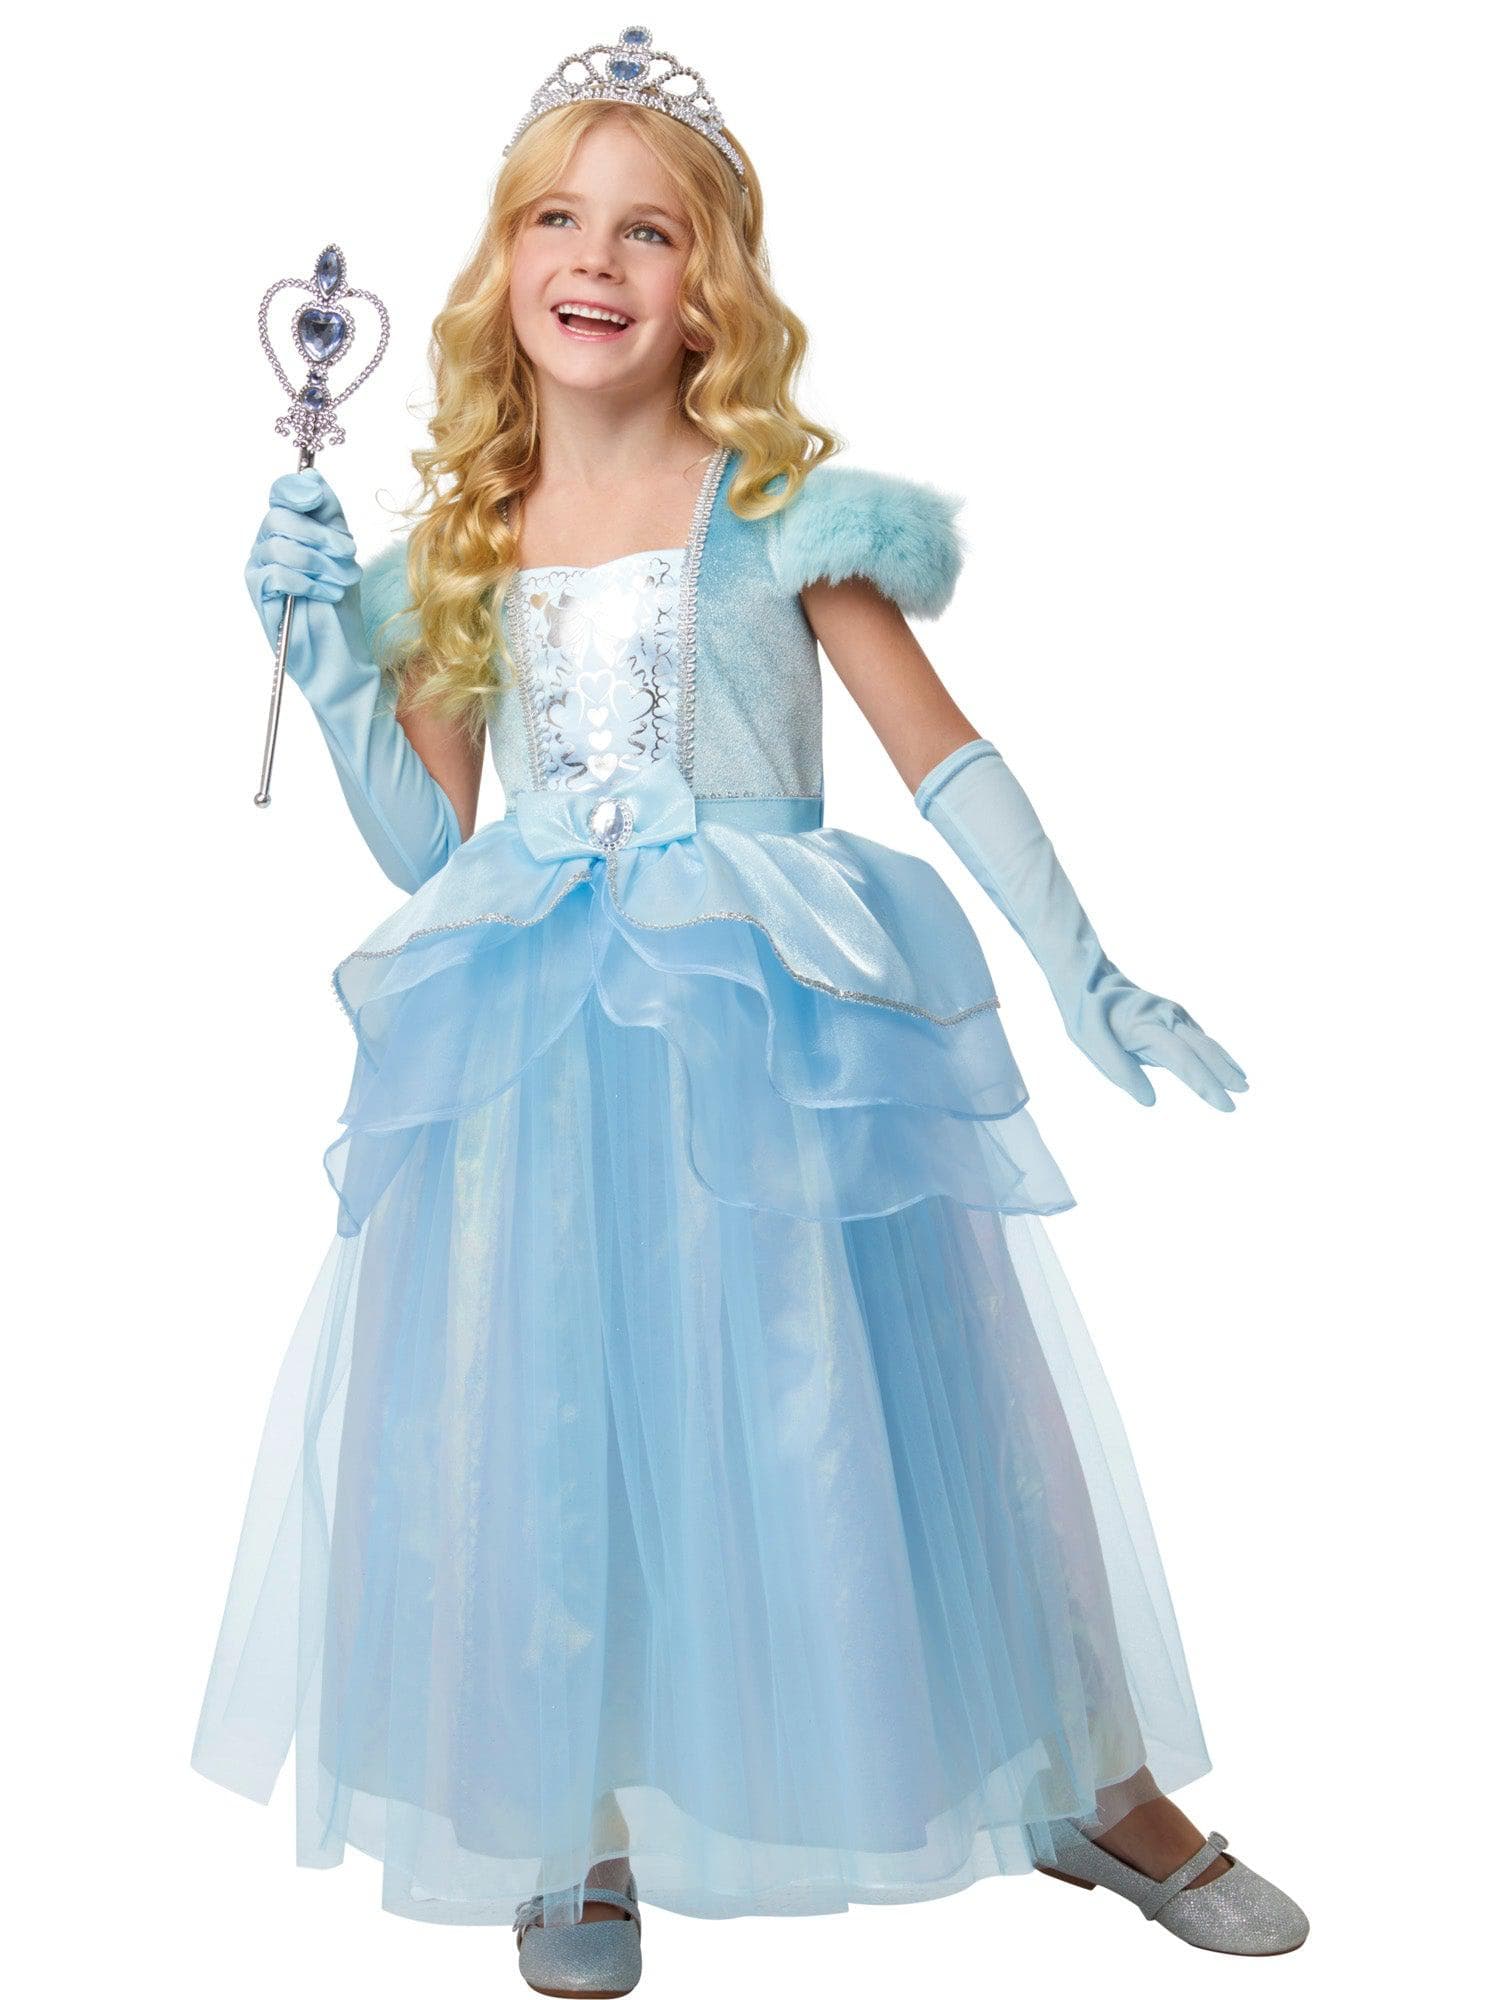 Blue Princess Kids Costume - costumes.com